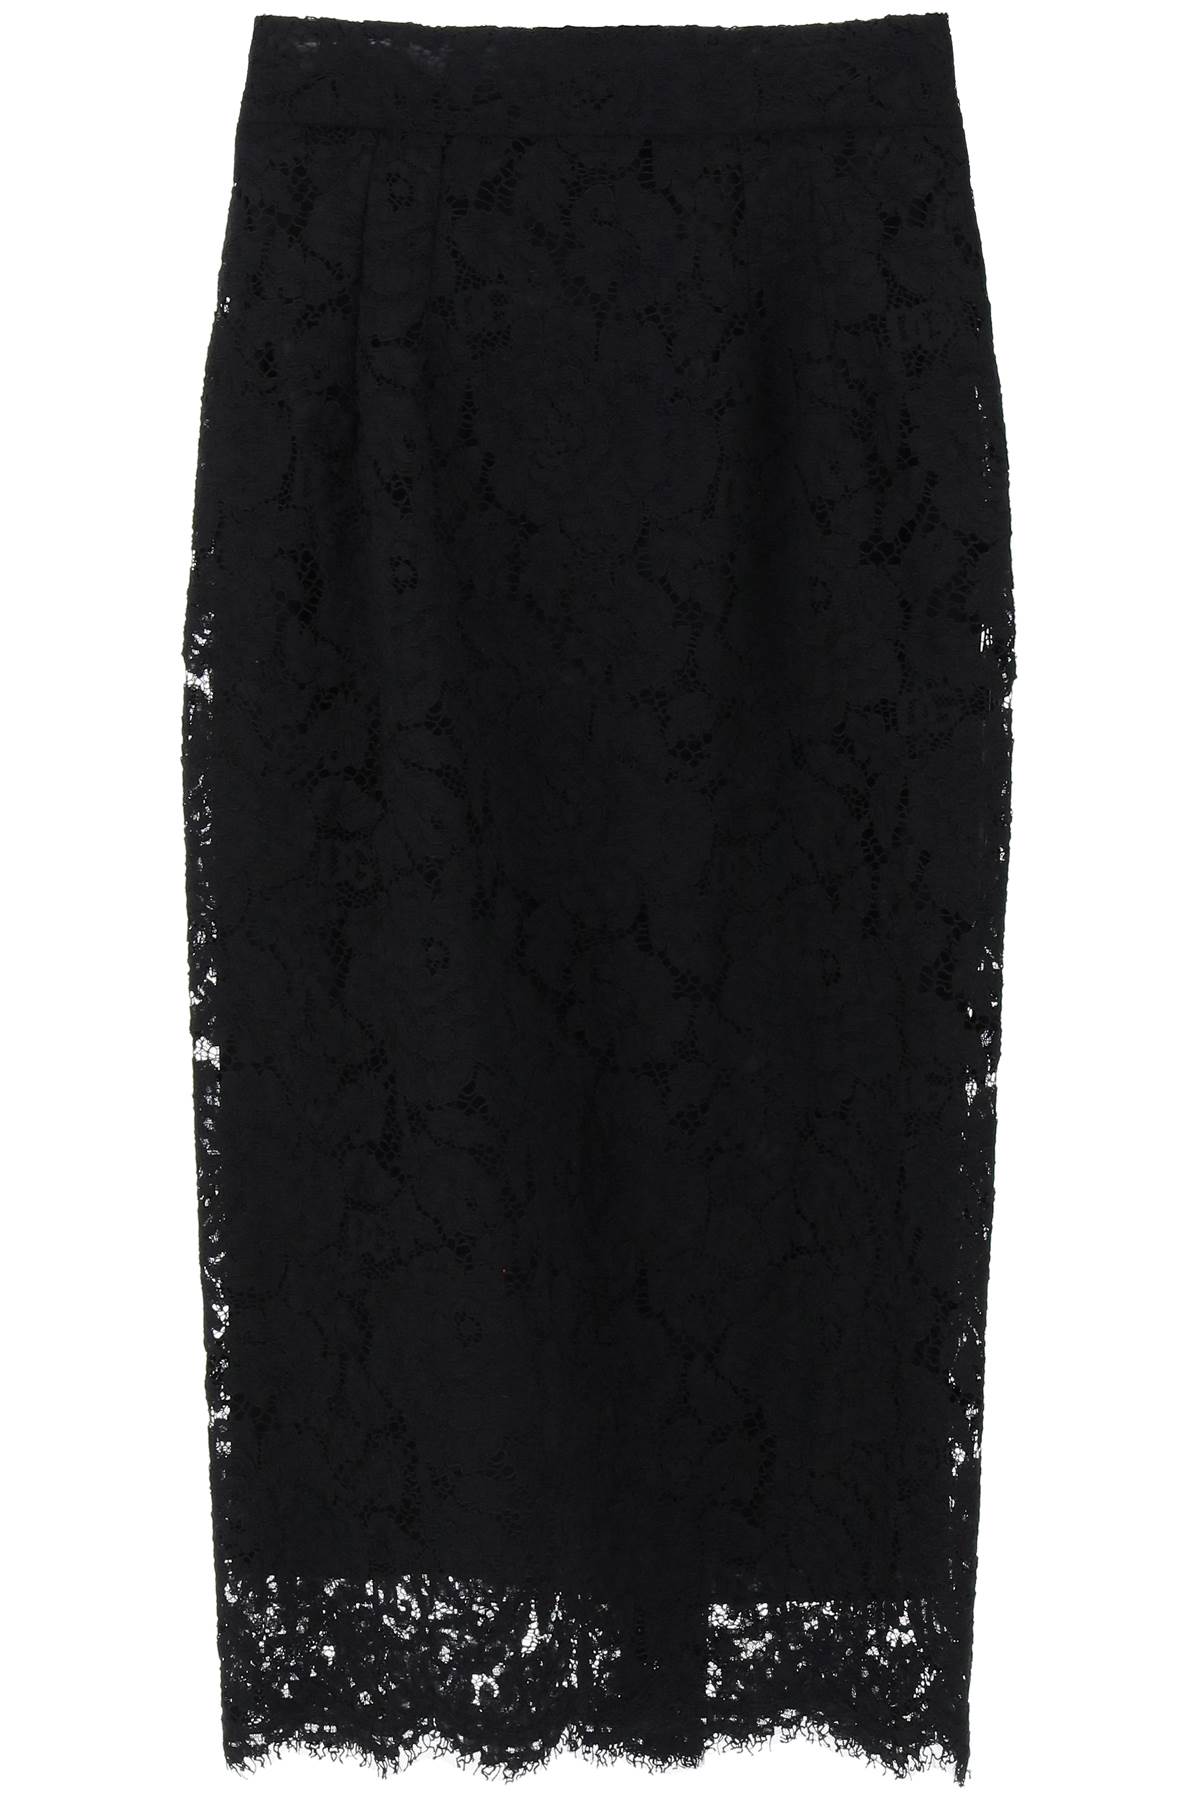 Dolce & Gabbana Midi Lace Pencil Skirt